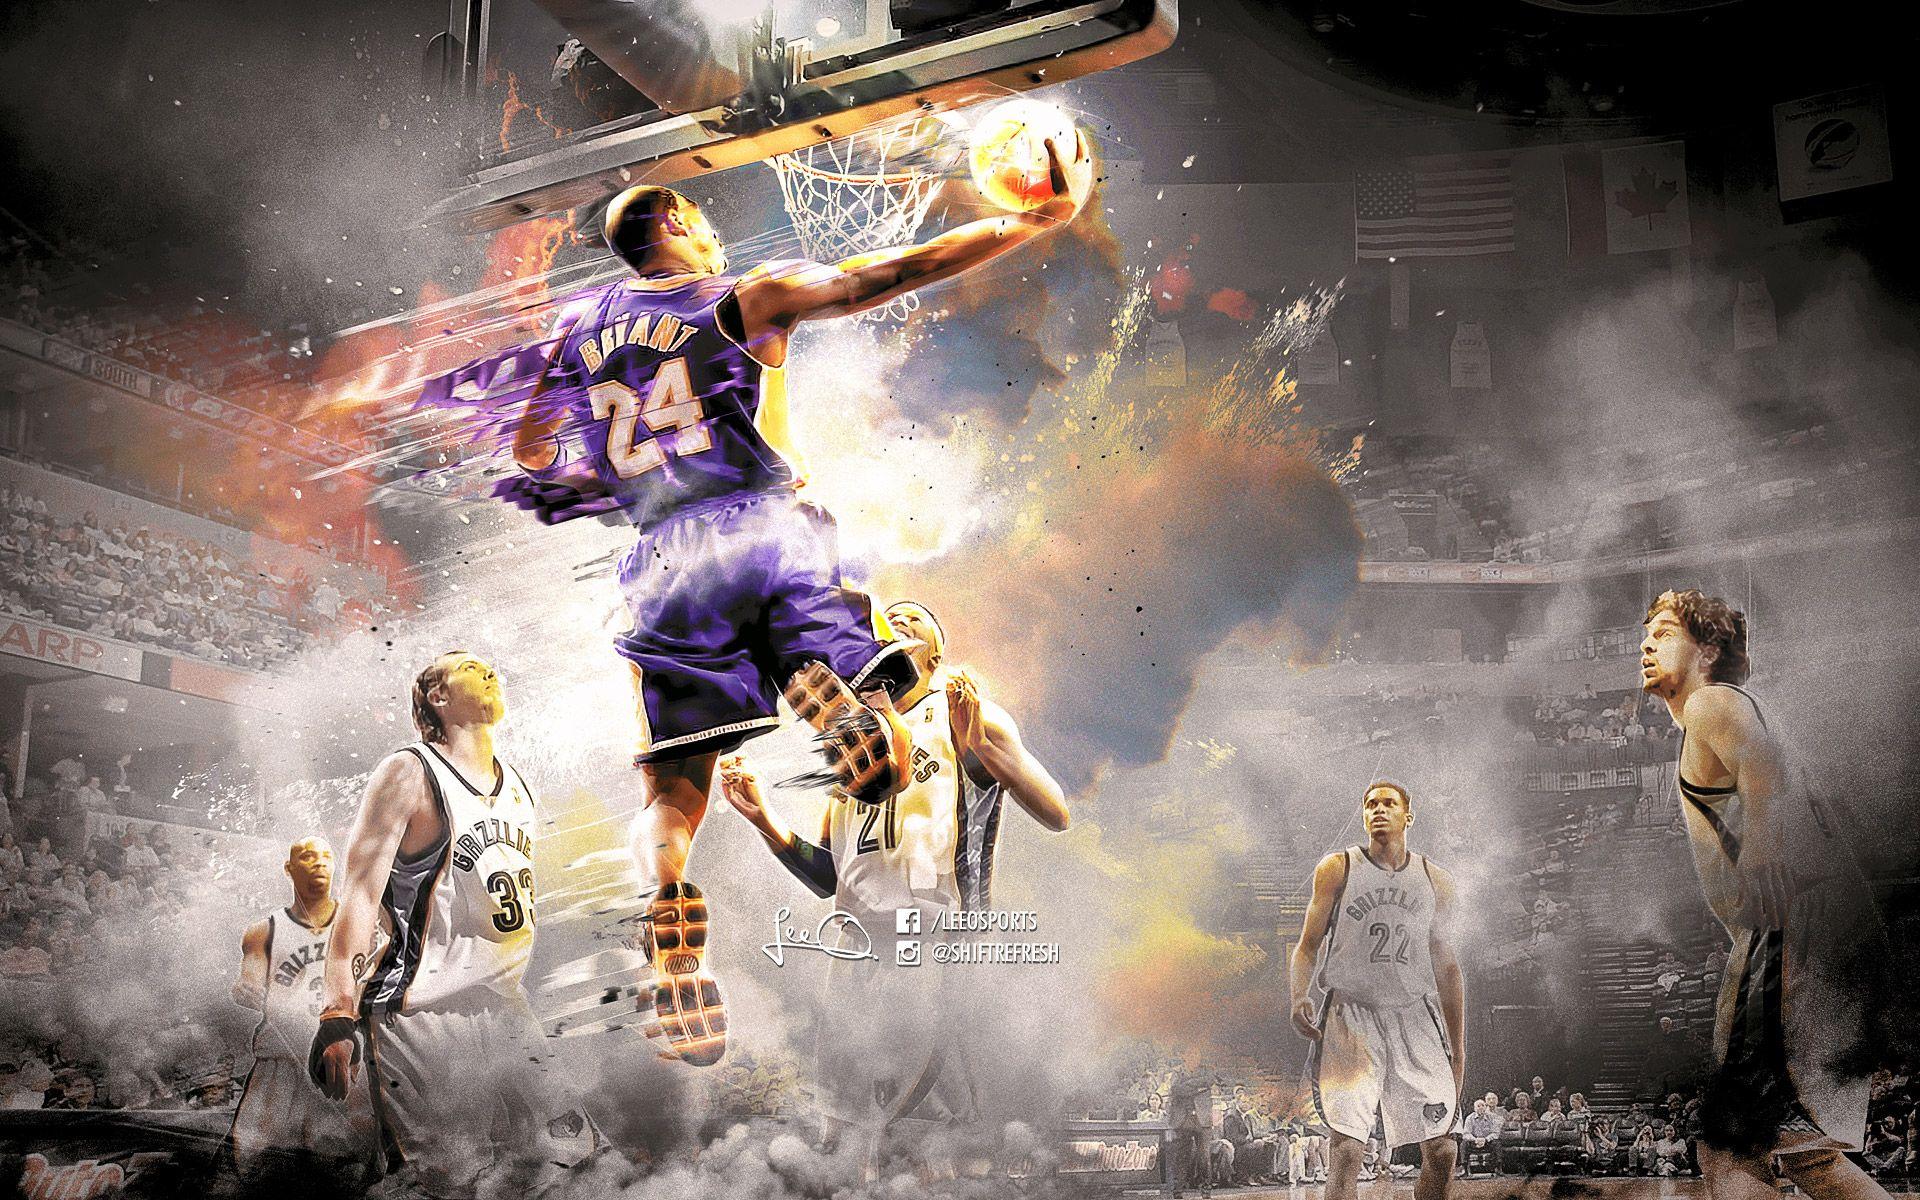 Kobe Bryant Wallpaper Basketball Wallpaper at. Kobe bryant wallpaper, Kobe bryant wallpaper, Kobe bryant wallpaper hd